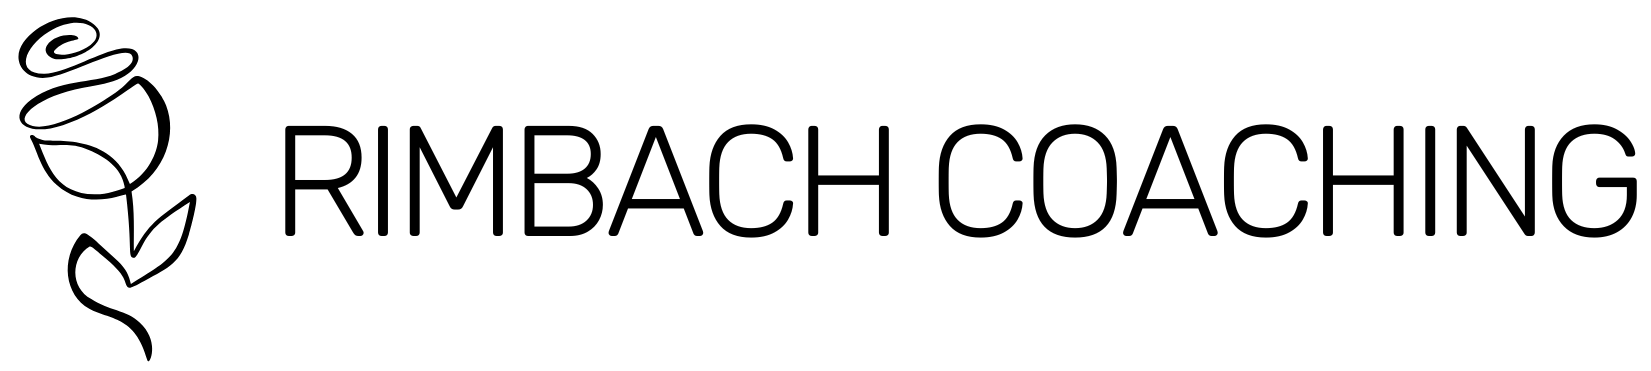 Rimbach Logo schwarz